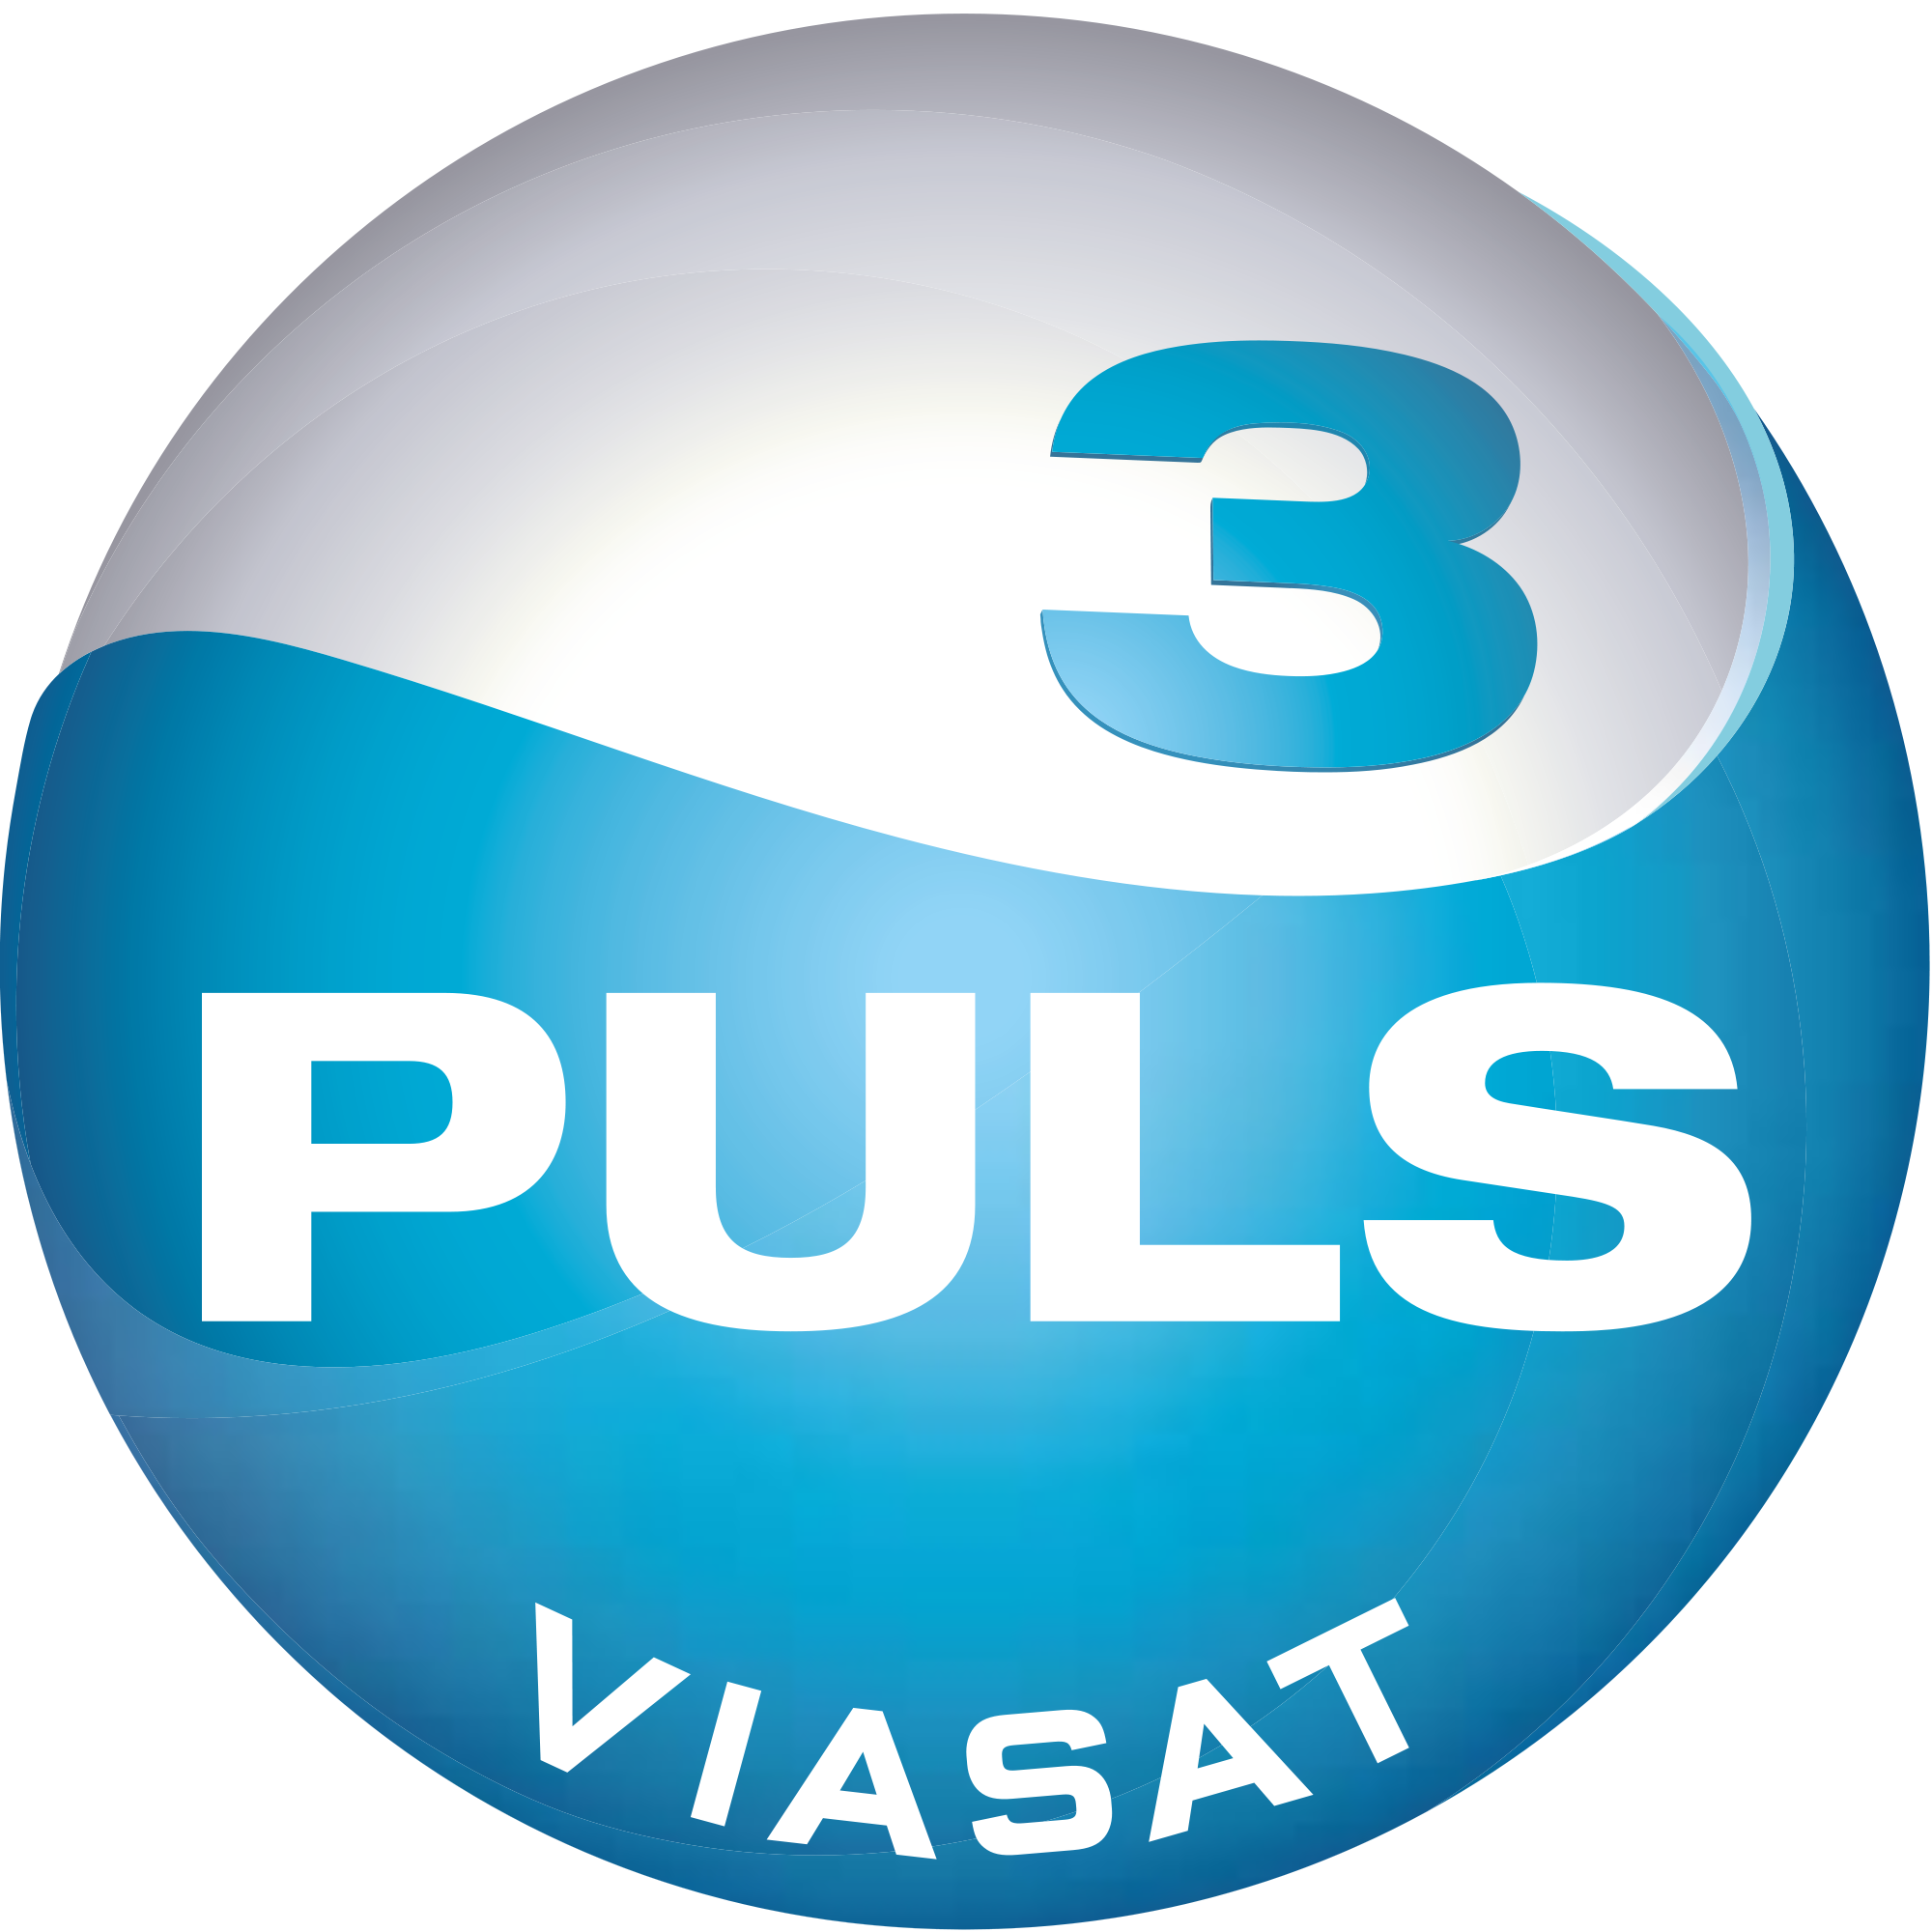 Tv3 Viasat. Viasat-3. ТВ-ТВ-3. TV puls. Tv3 3